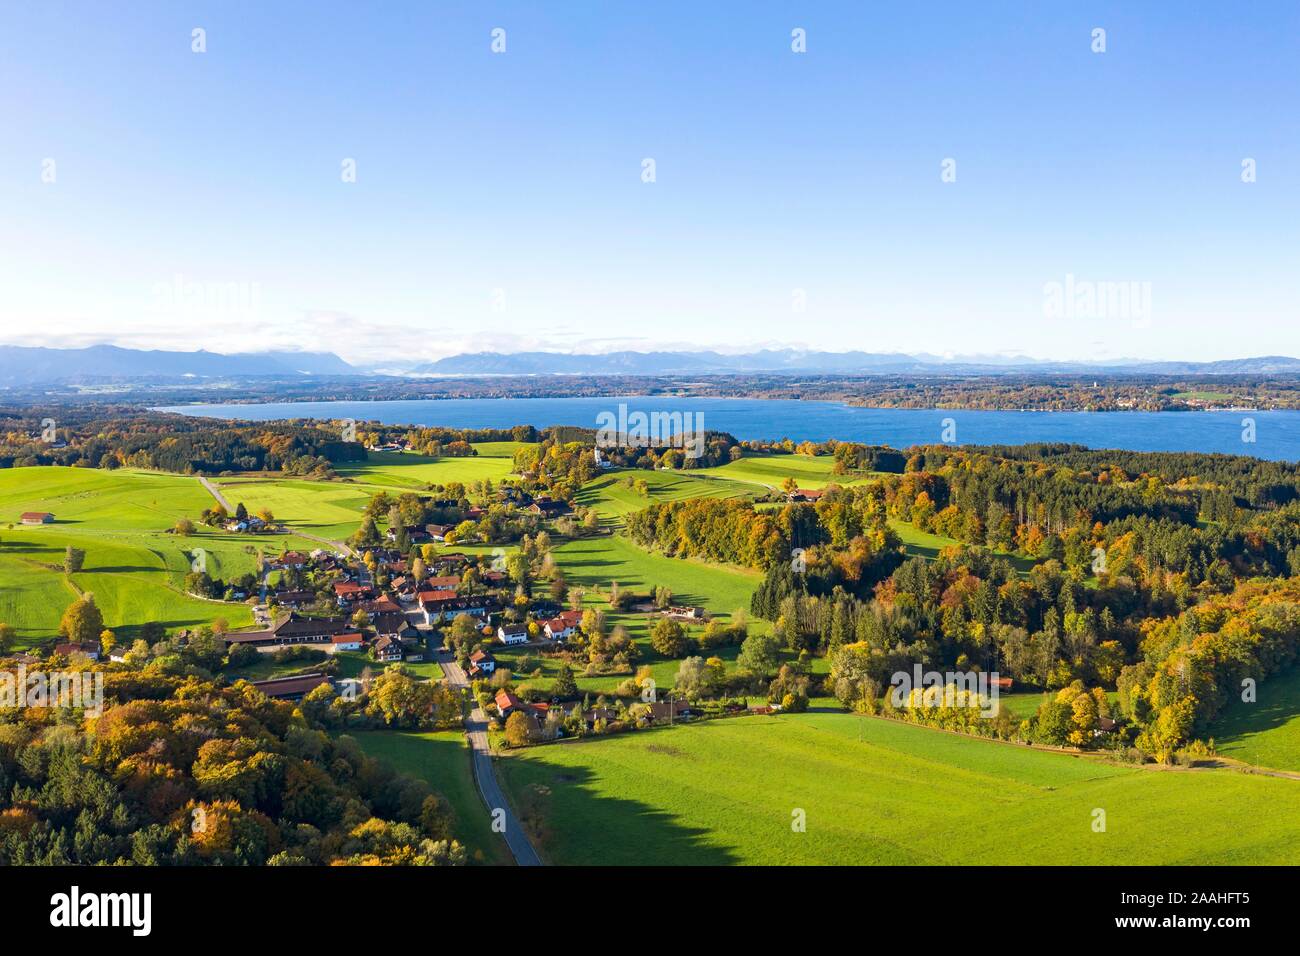 Holzhausen al Lago di Starnberg, vista aerea, Funfseenland, Alta Baviera, Baviera, Germania Foto Stock